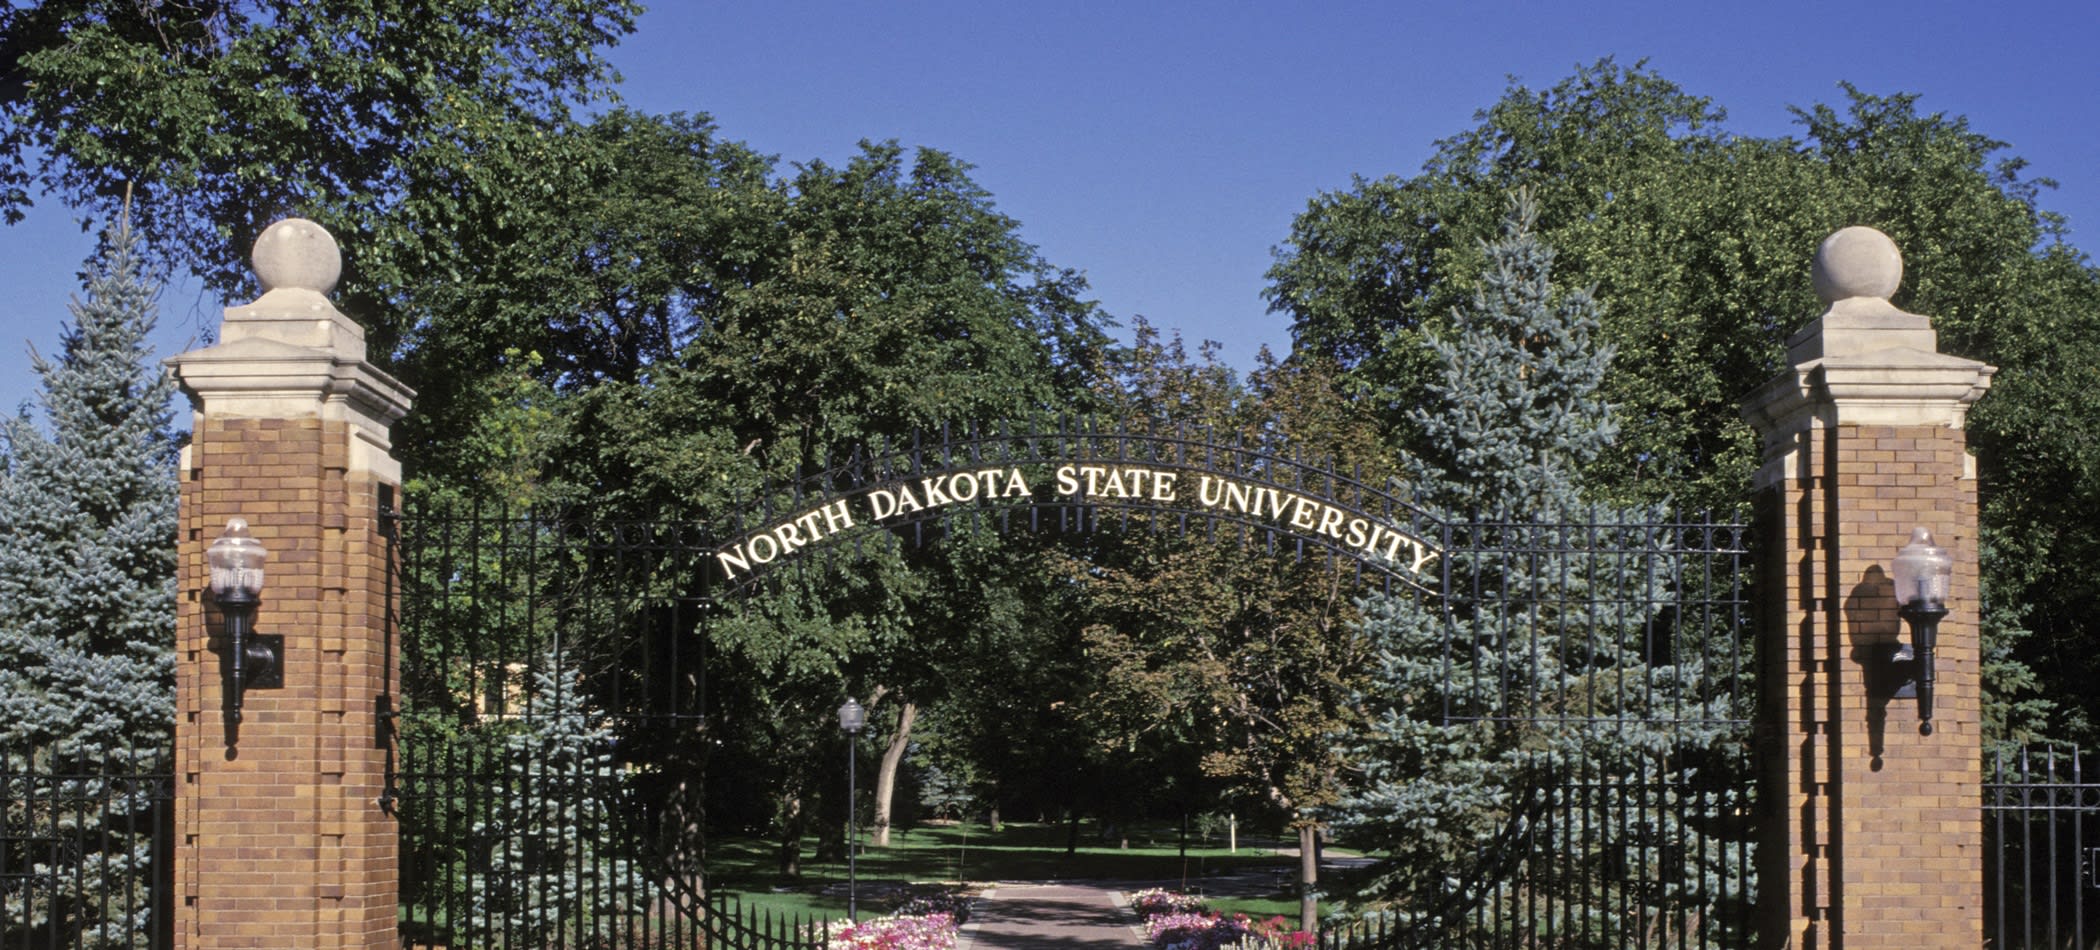 North Dakota State University Graduate School